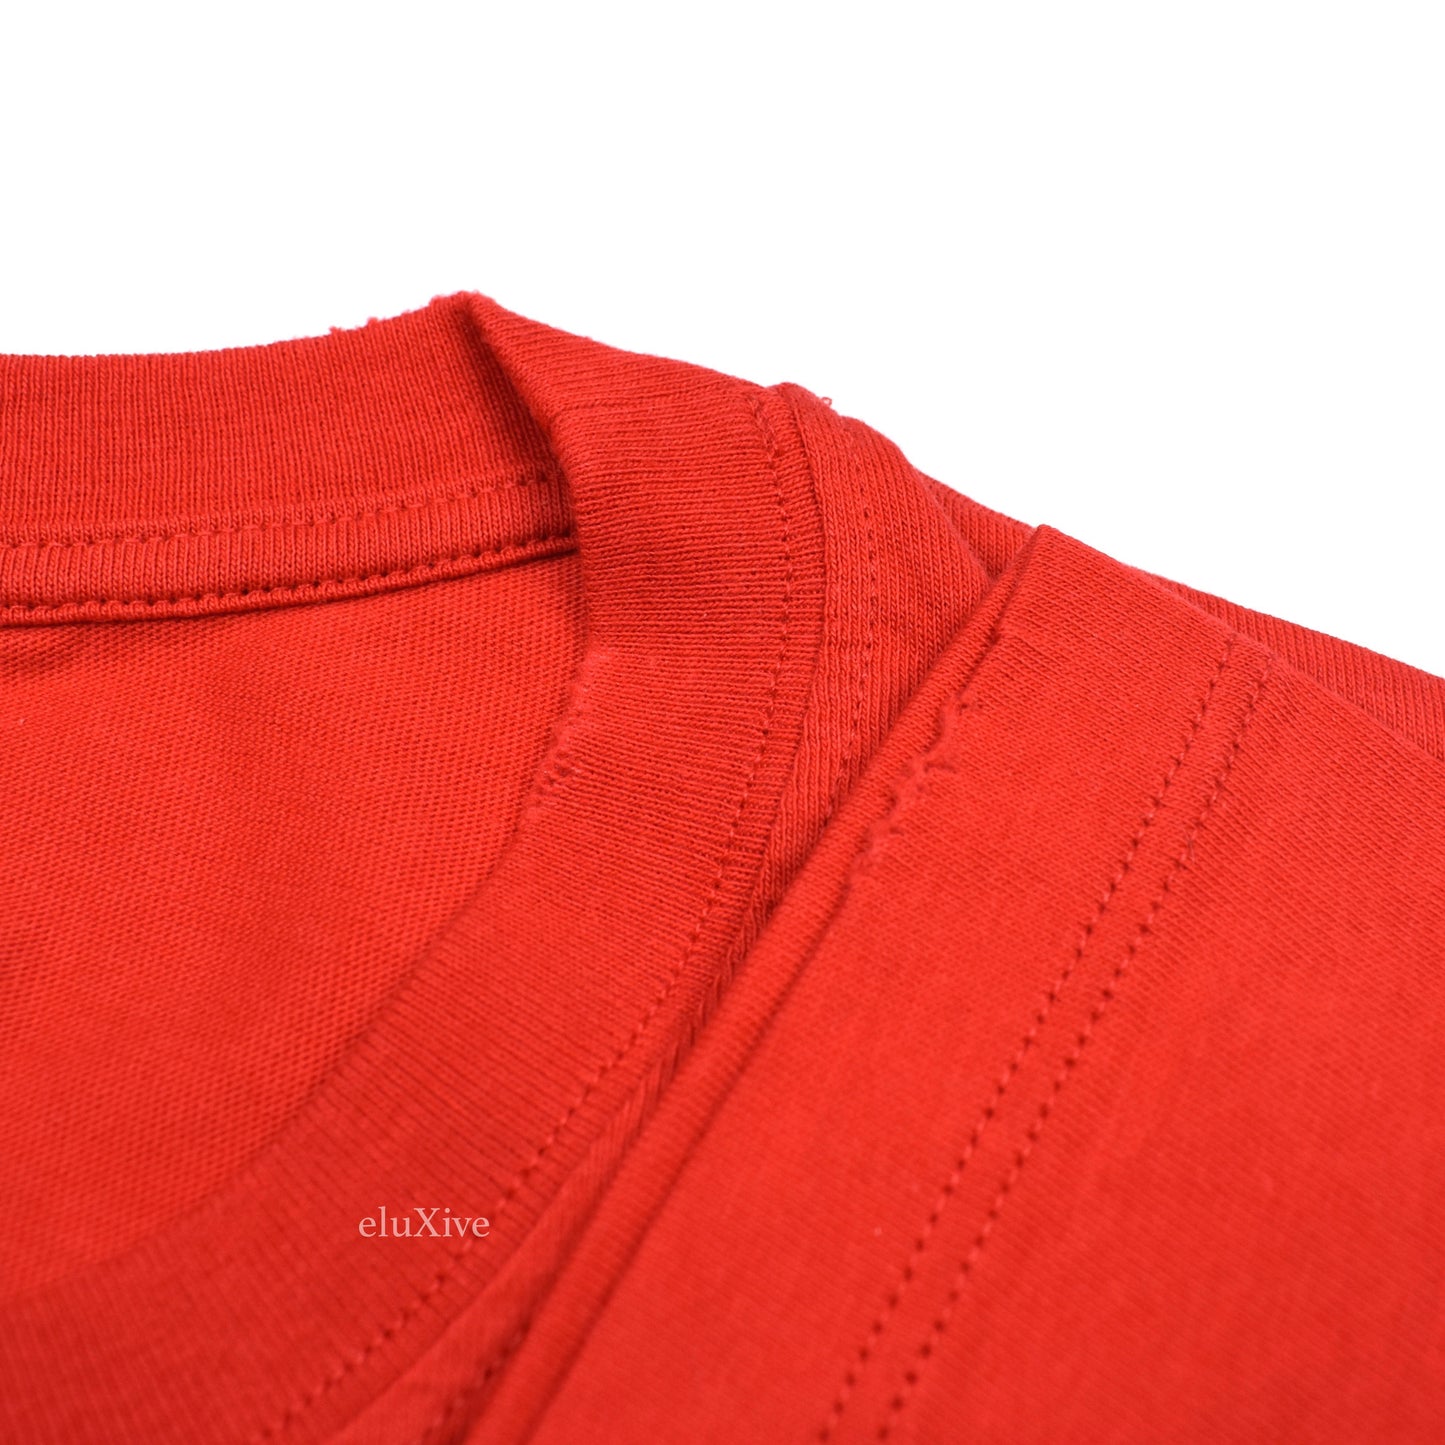 Gucci - Red Back Logo Print Distressed T-Shirt